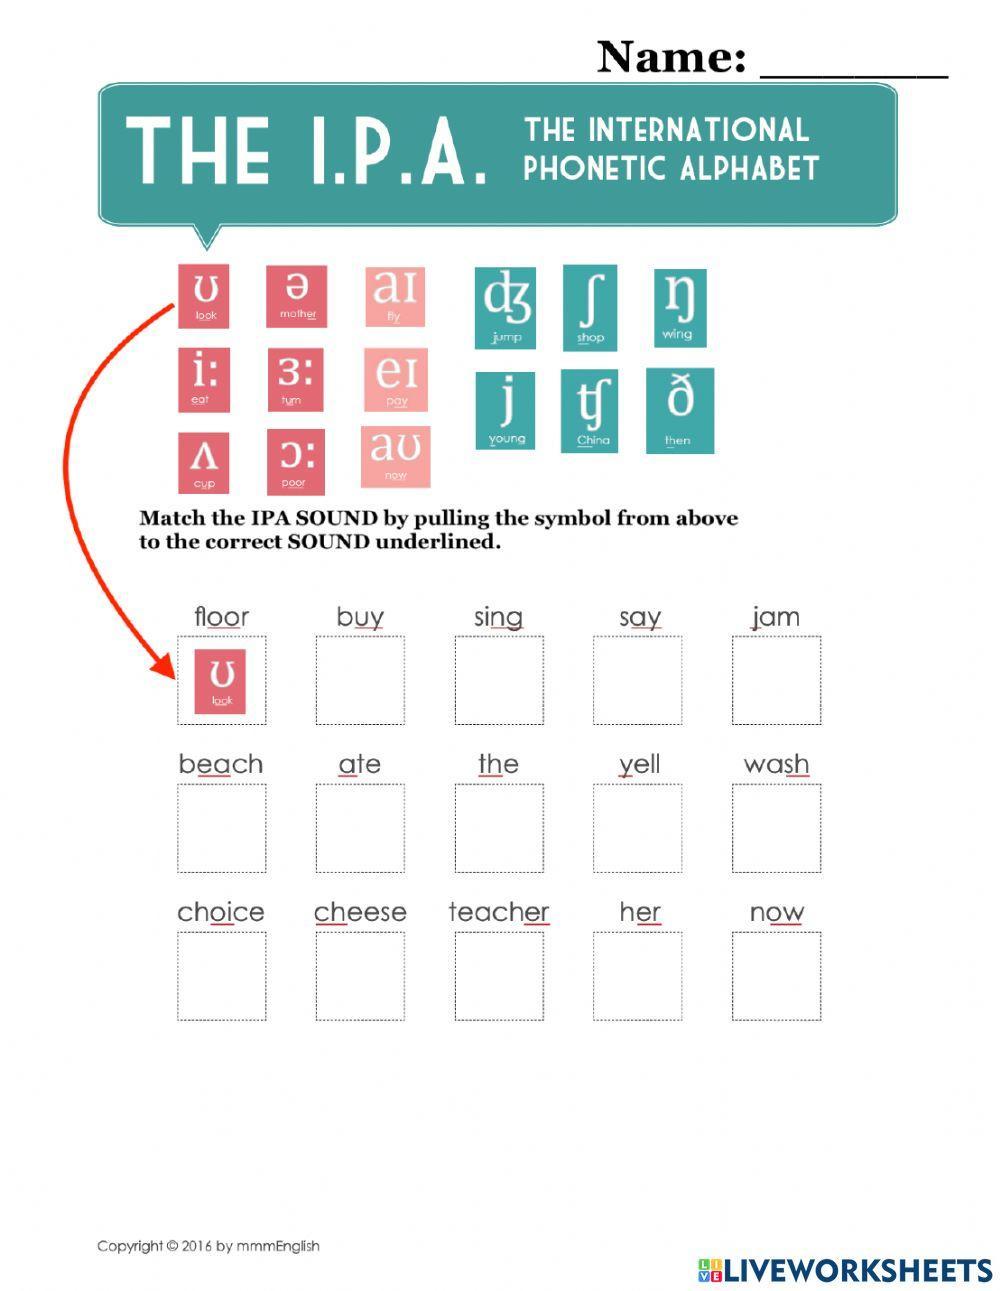 IPA: International Phonetic Alphabet